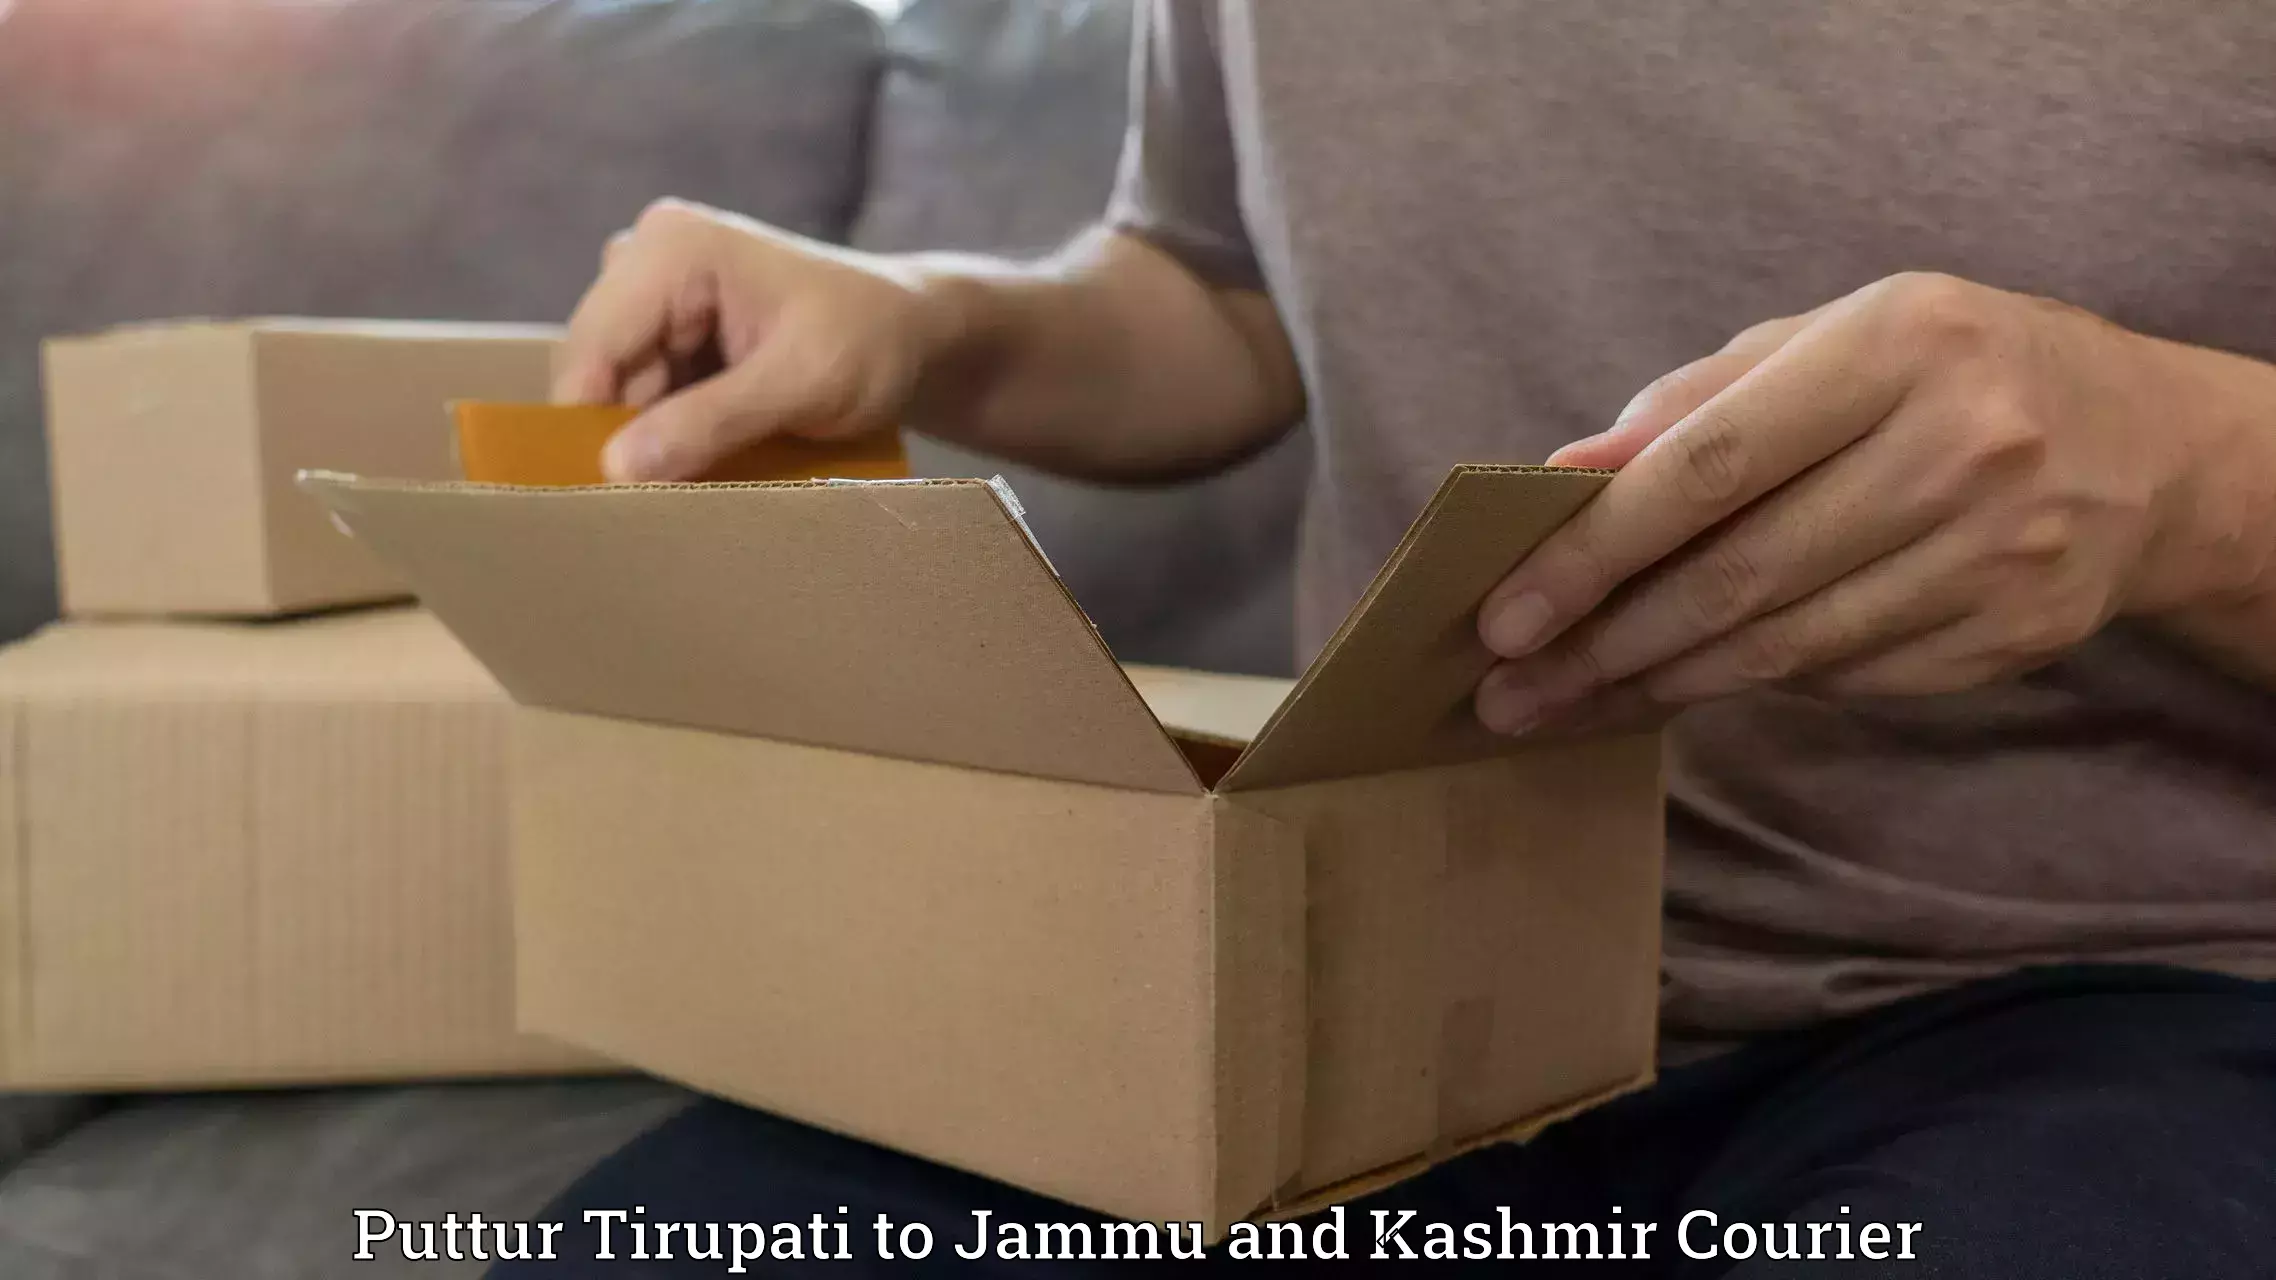 Nationwide delivery network Puttur Tirupati to Jammu